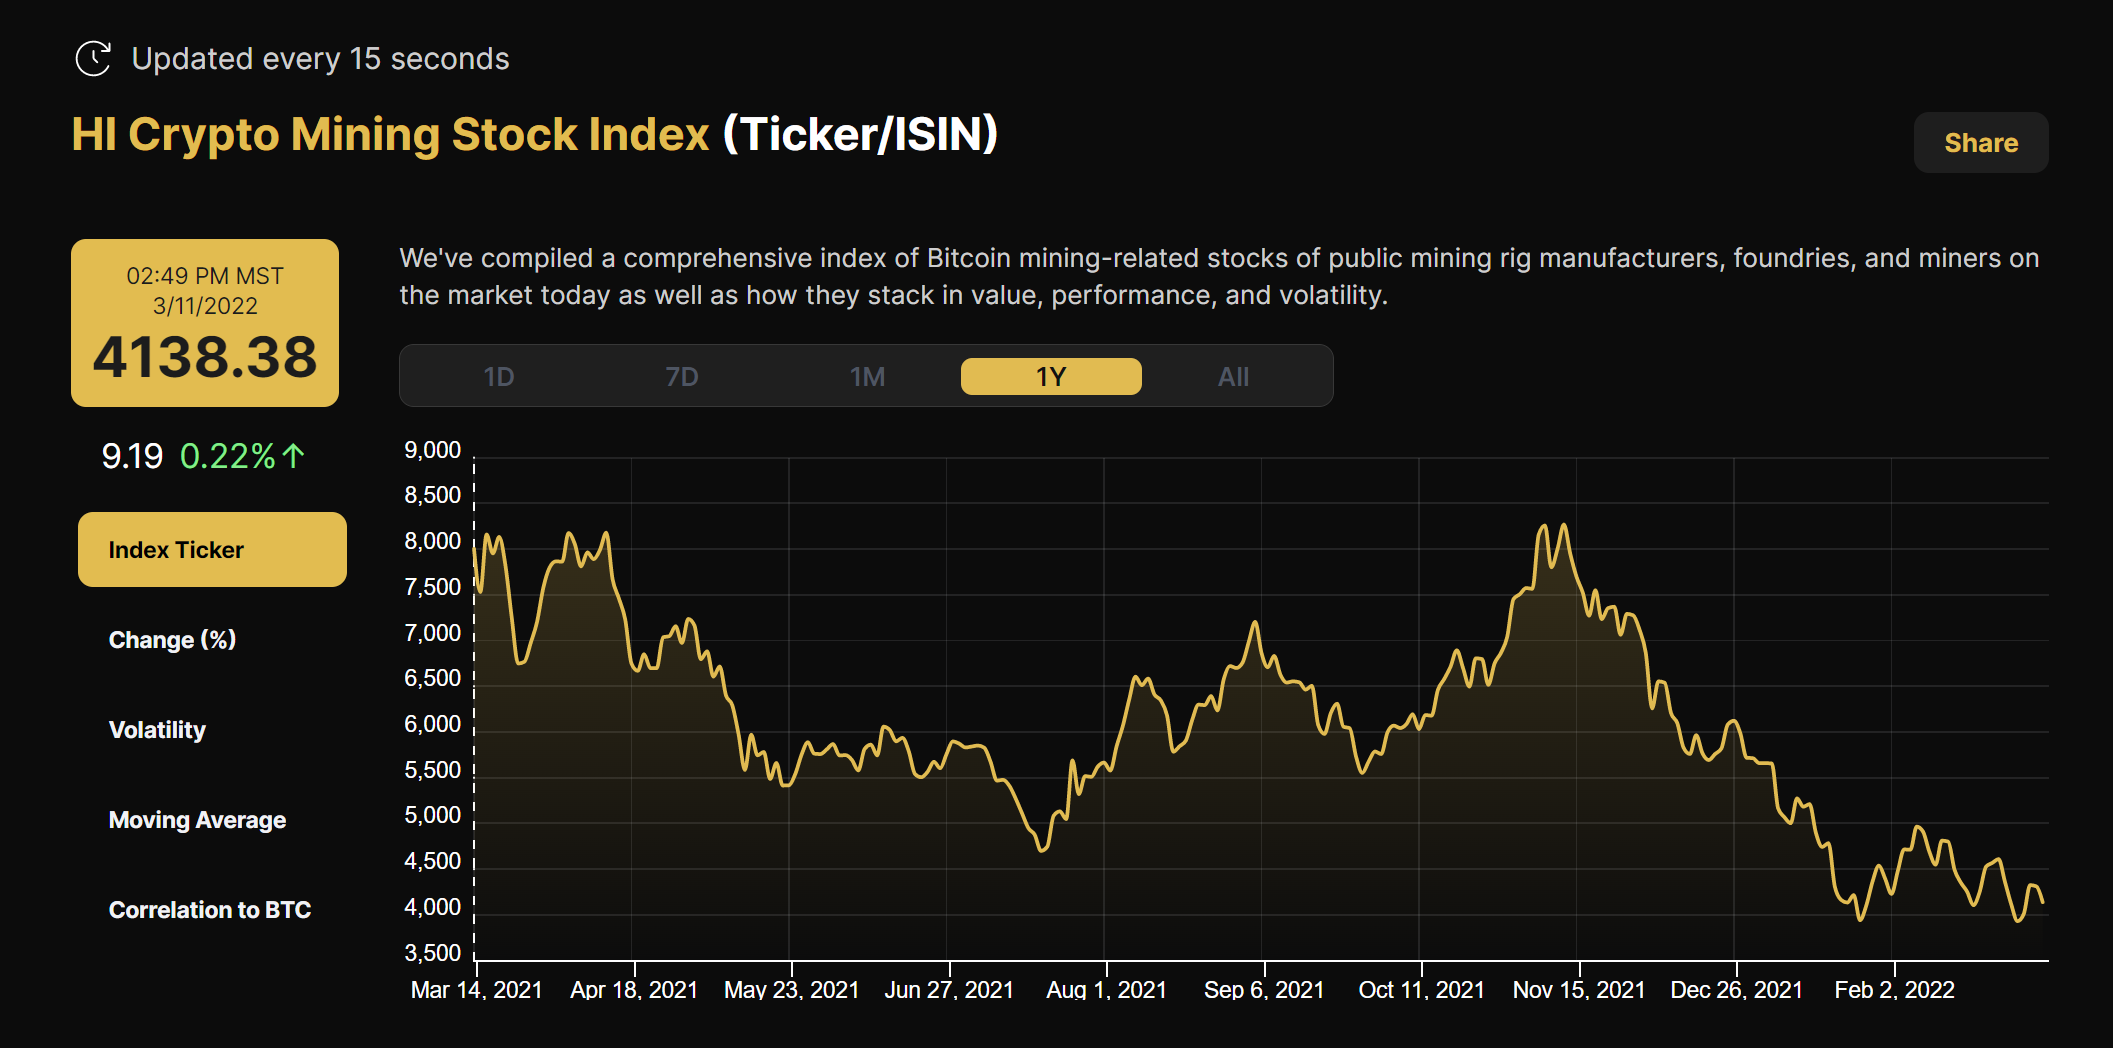 Crypto mining stock index 3/13/2022